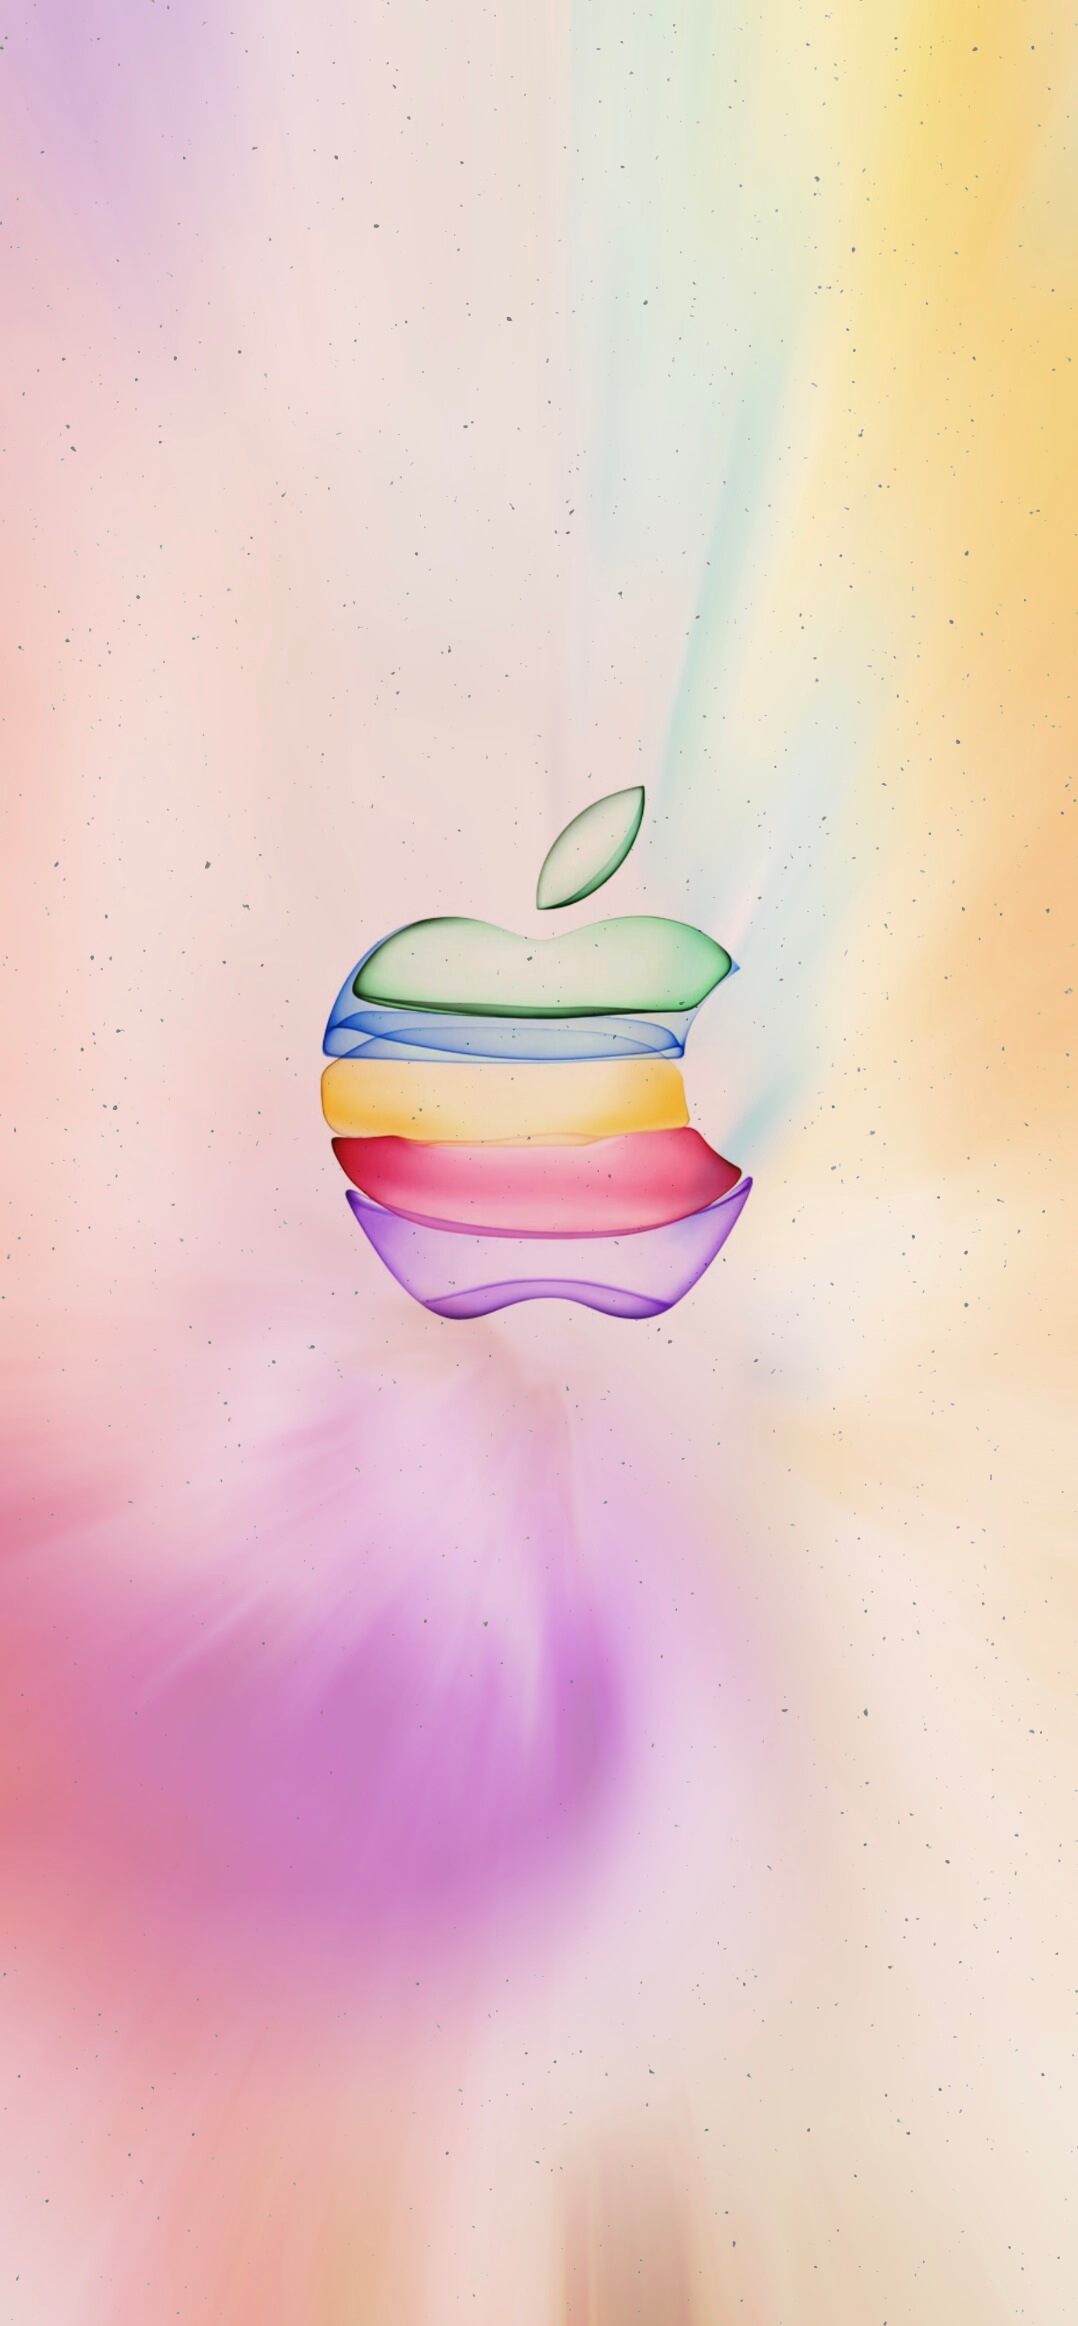 Apple-Event-iPhone-11-fresk0_